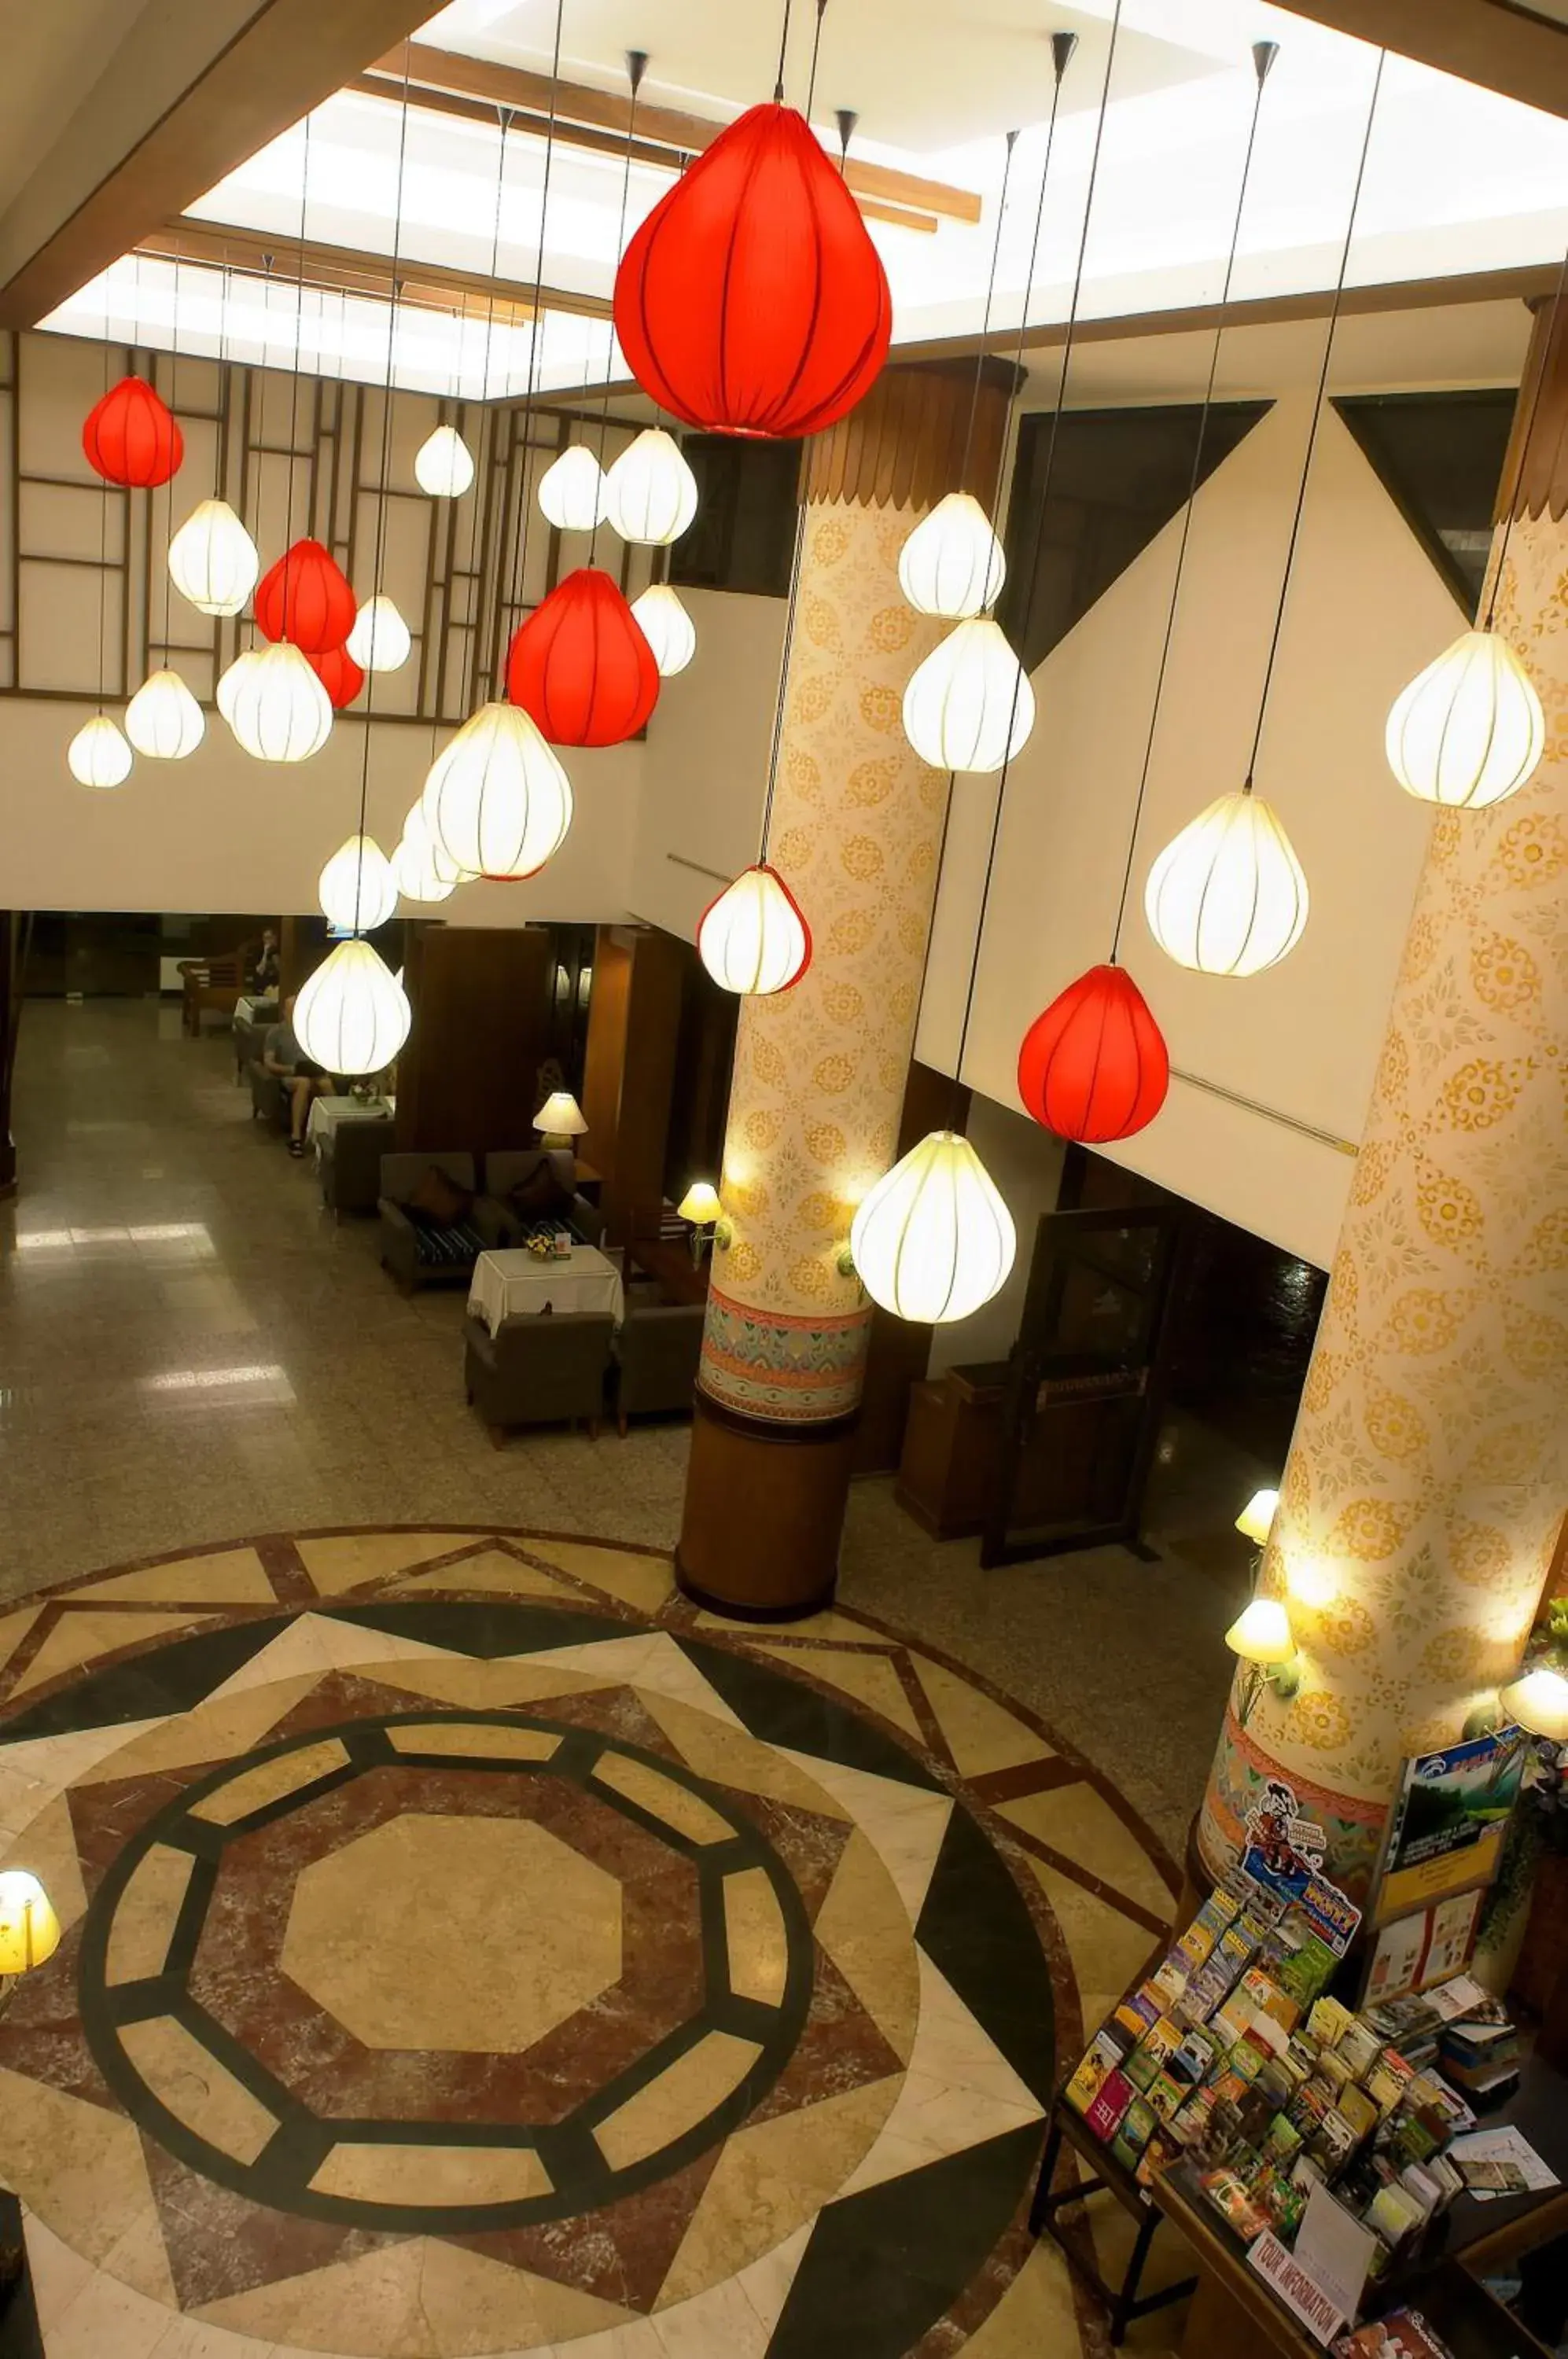 Lobby or reception in Chiangmai Gate Hotel